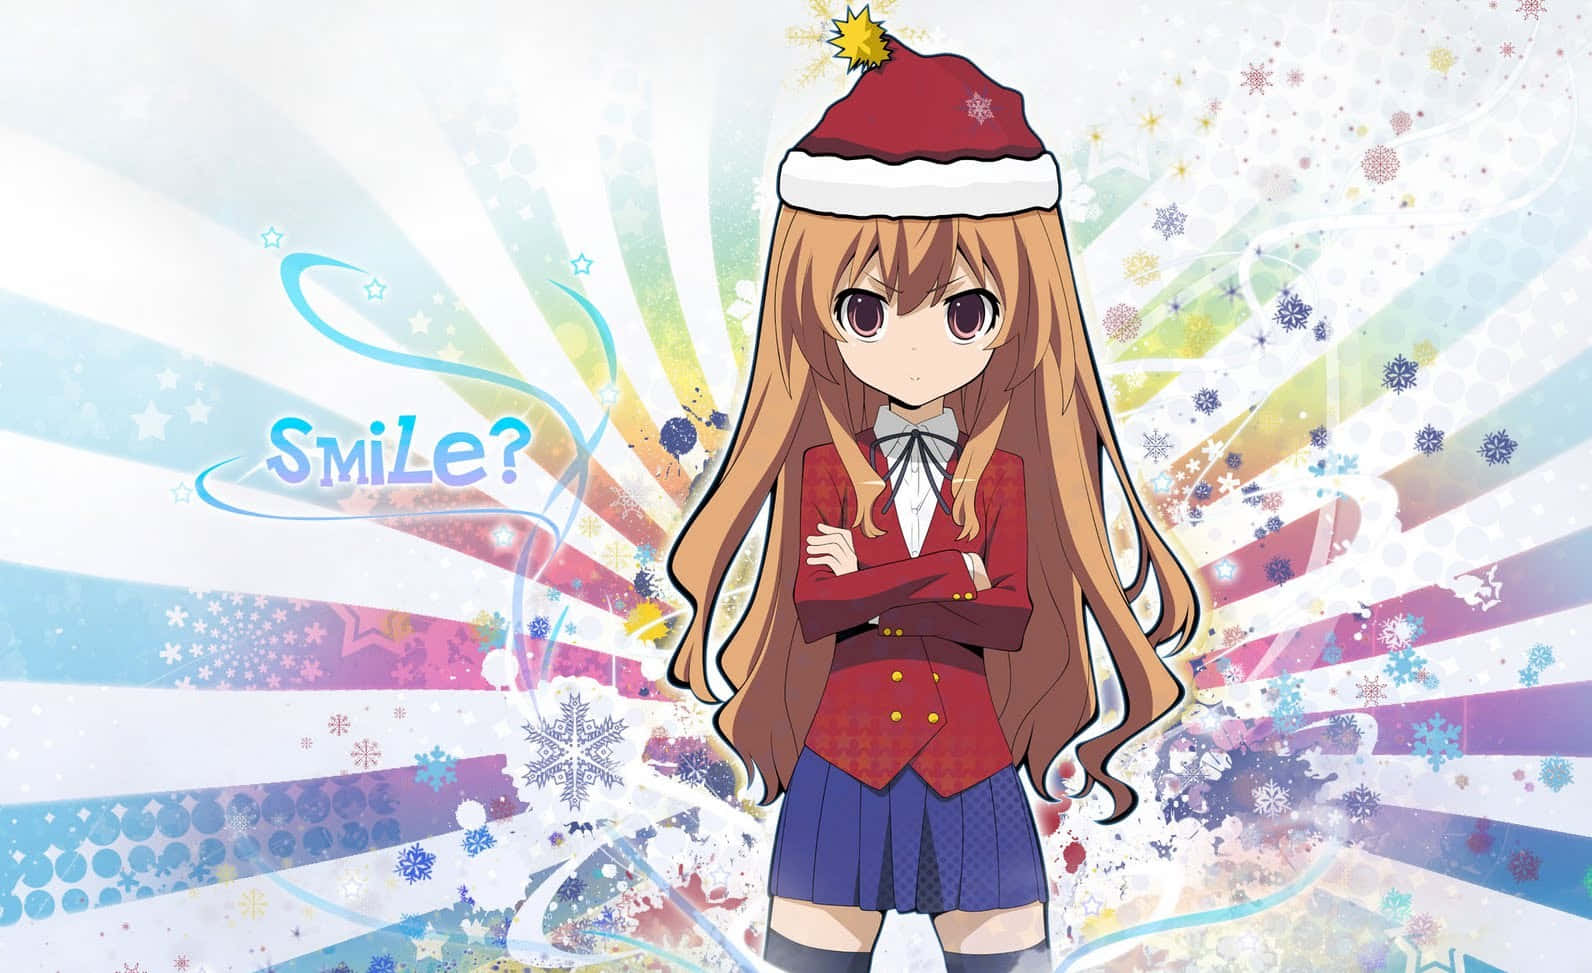 Spread Christmas cheer with this festive Anime Christmas scene!